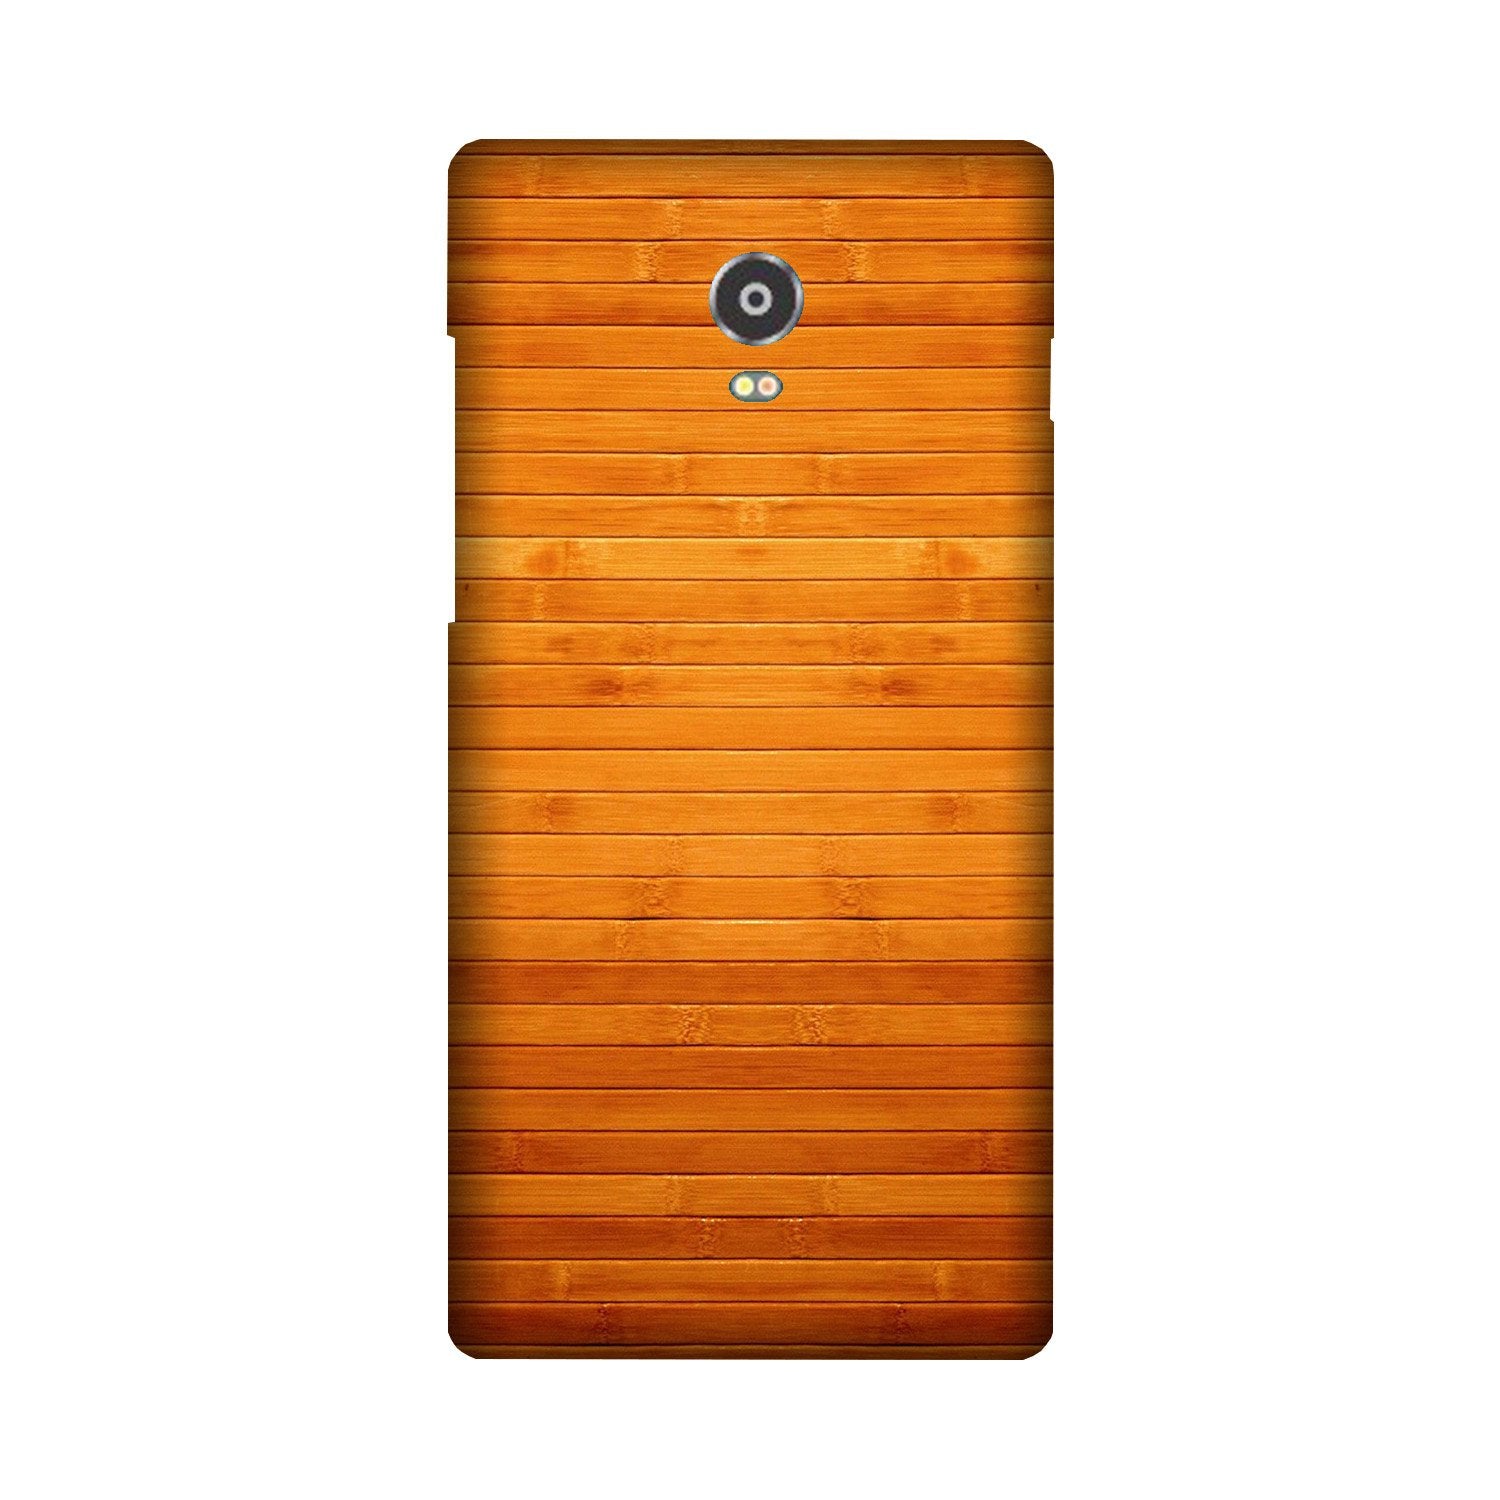 Wooden Look Case for Lenovo Vibe P1(Design - 111)